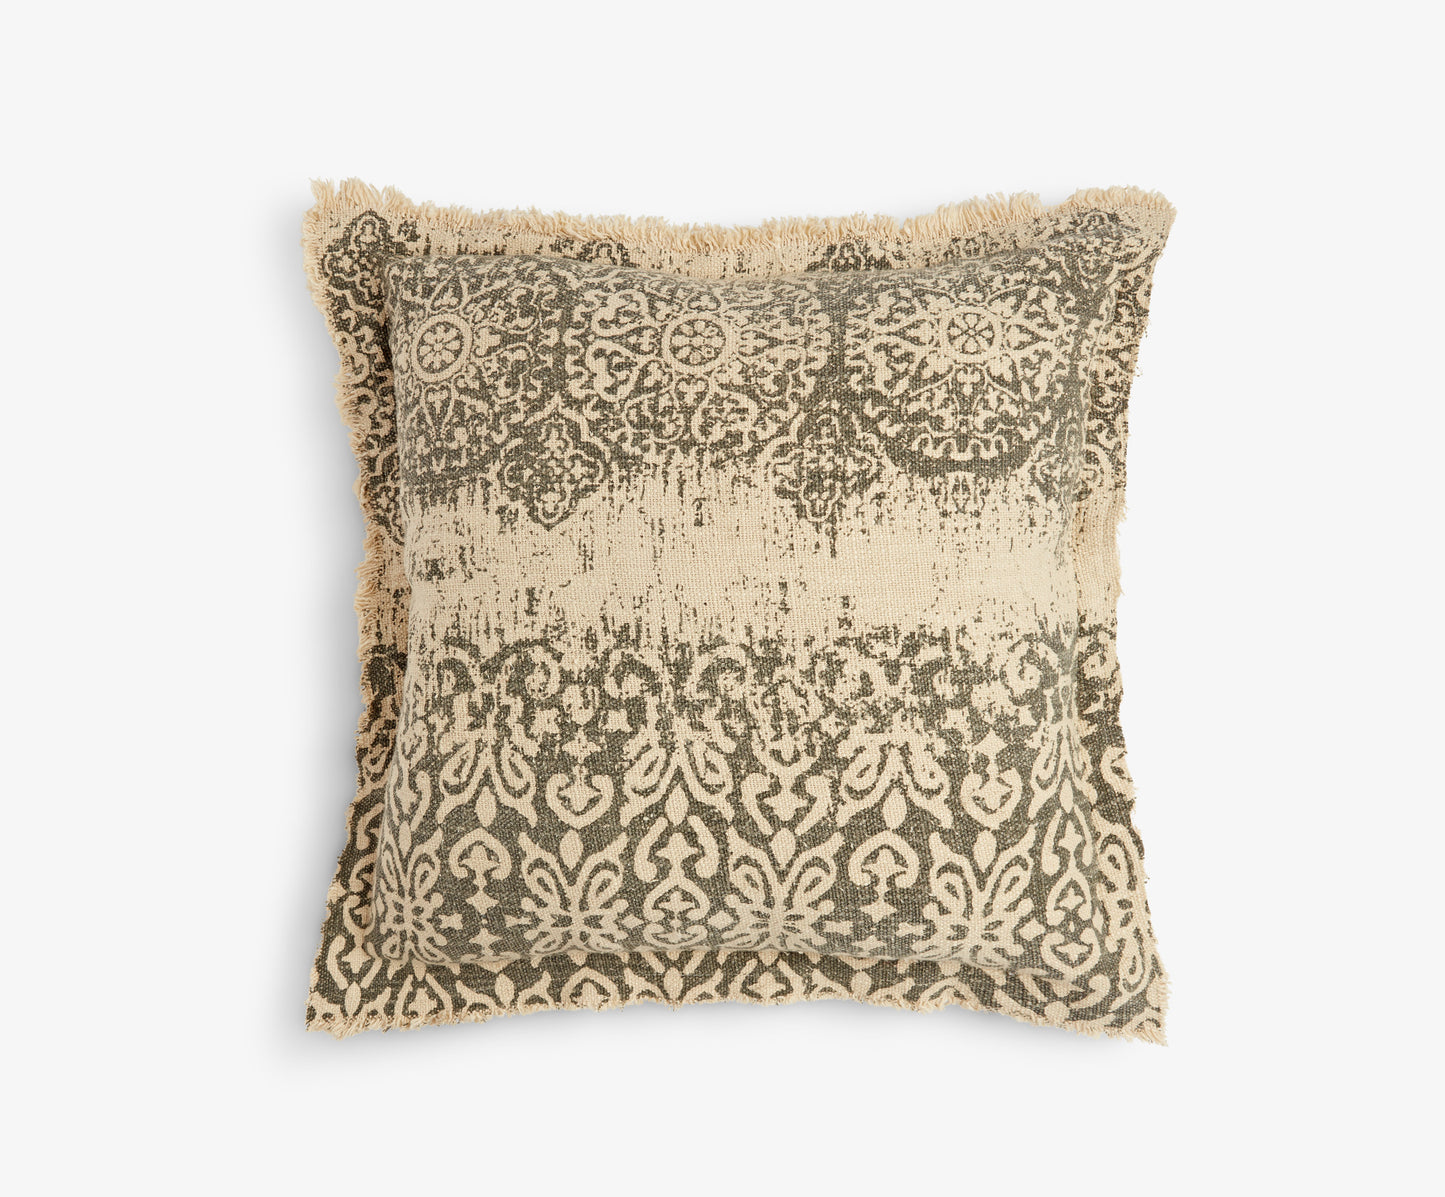 Medium Square Cushion with Khaki/Natural Print